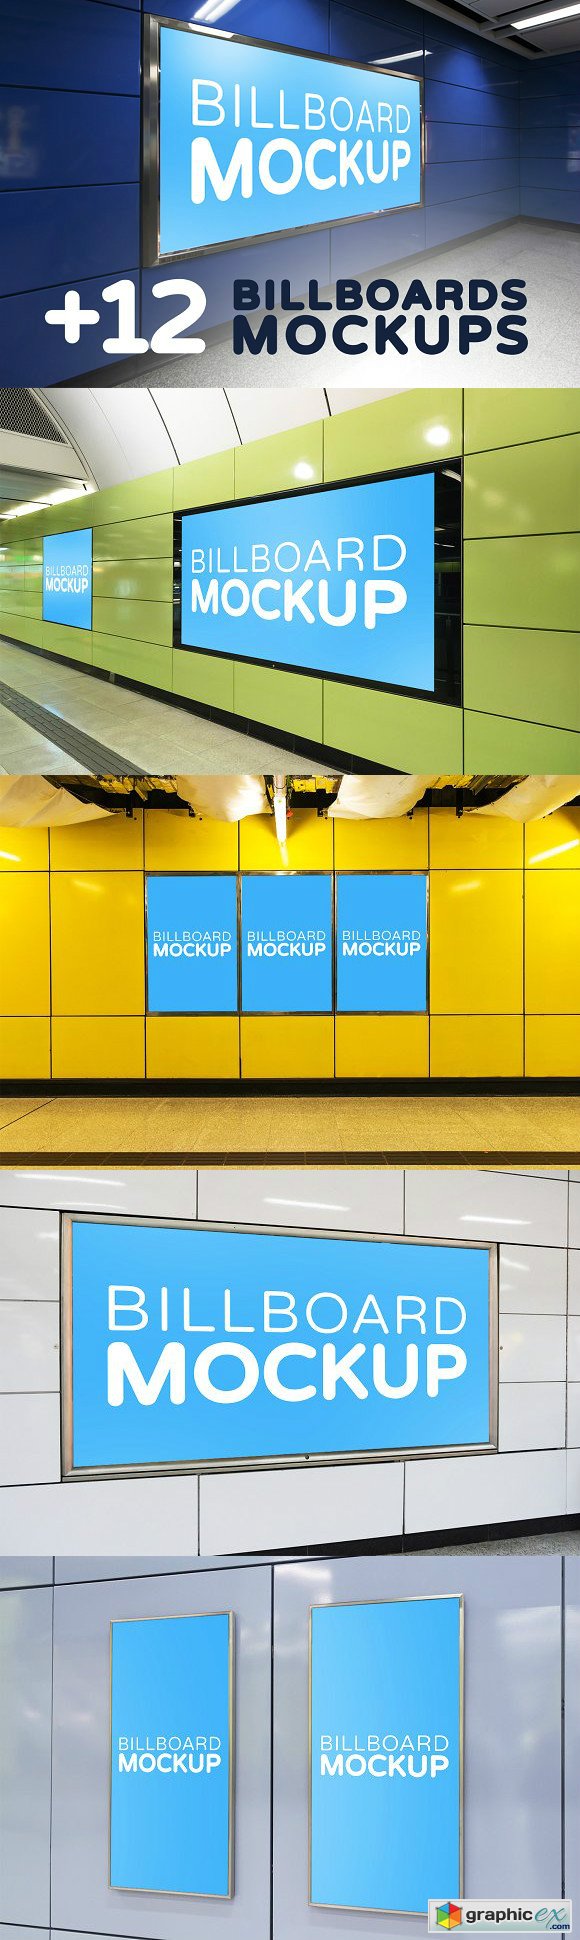 Subway Billboards Mockups Vol 2